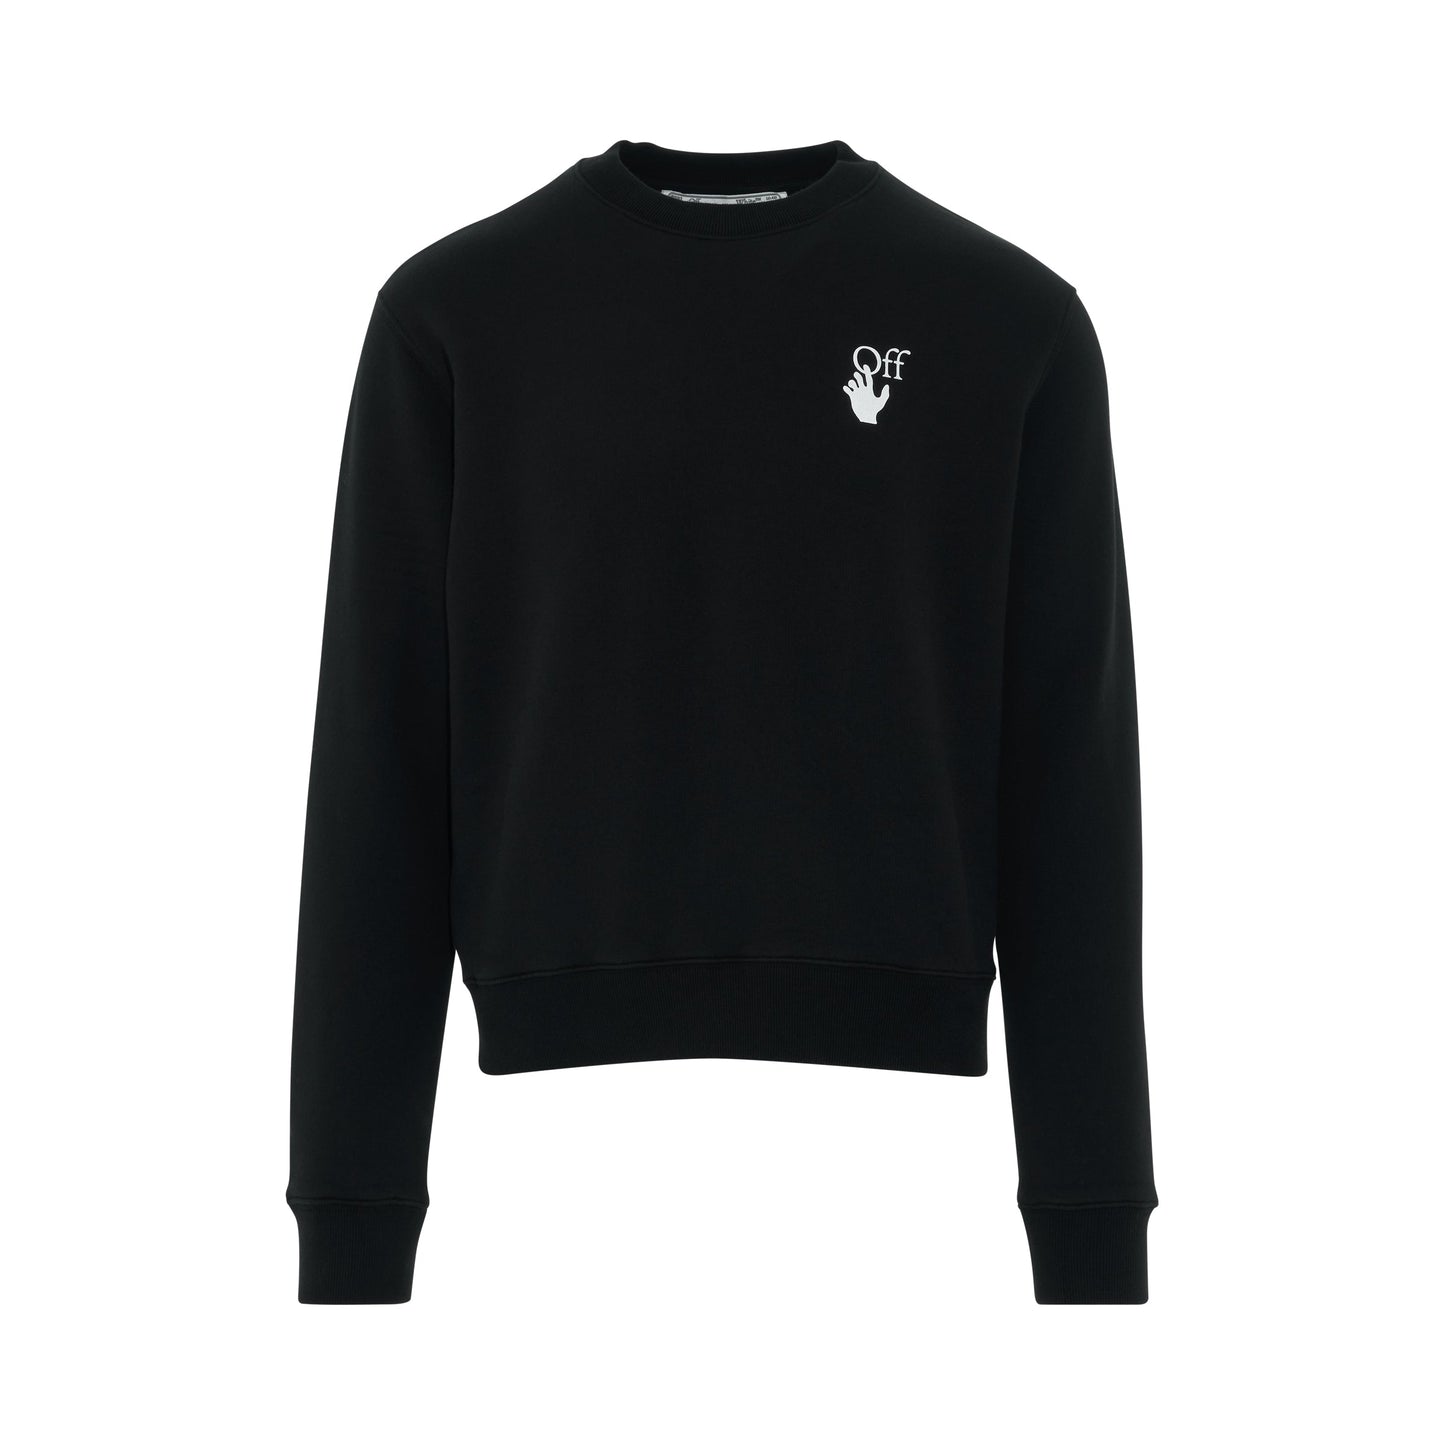 Degrade Arrow Slim Fit Sweatshirt in Black